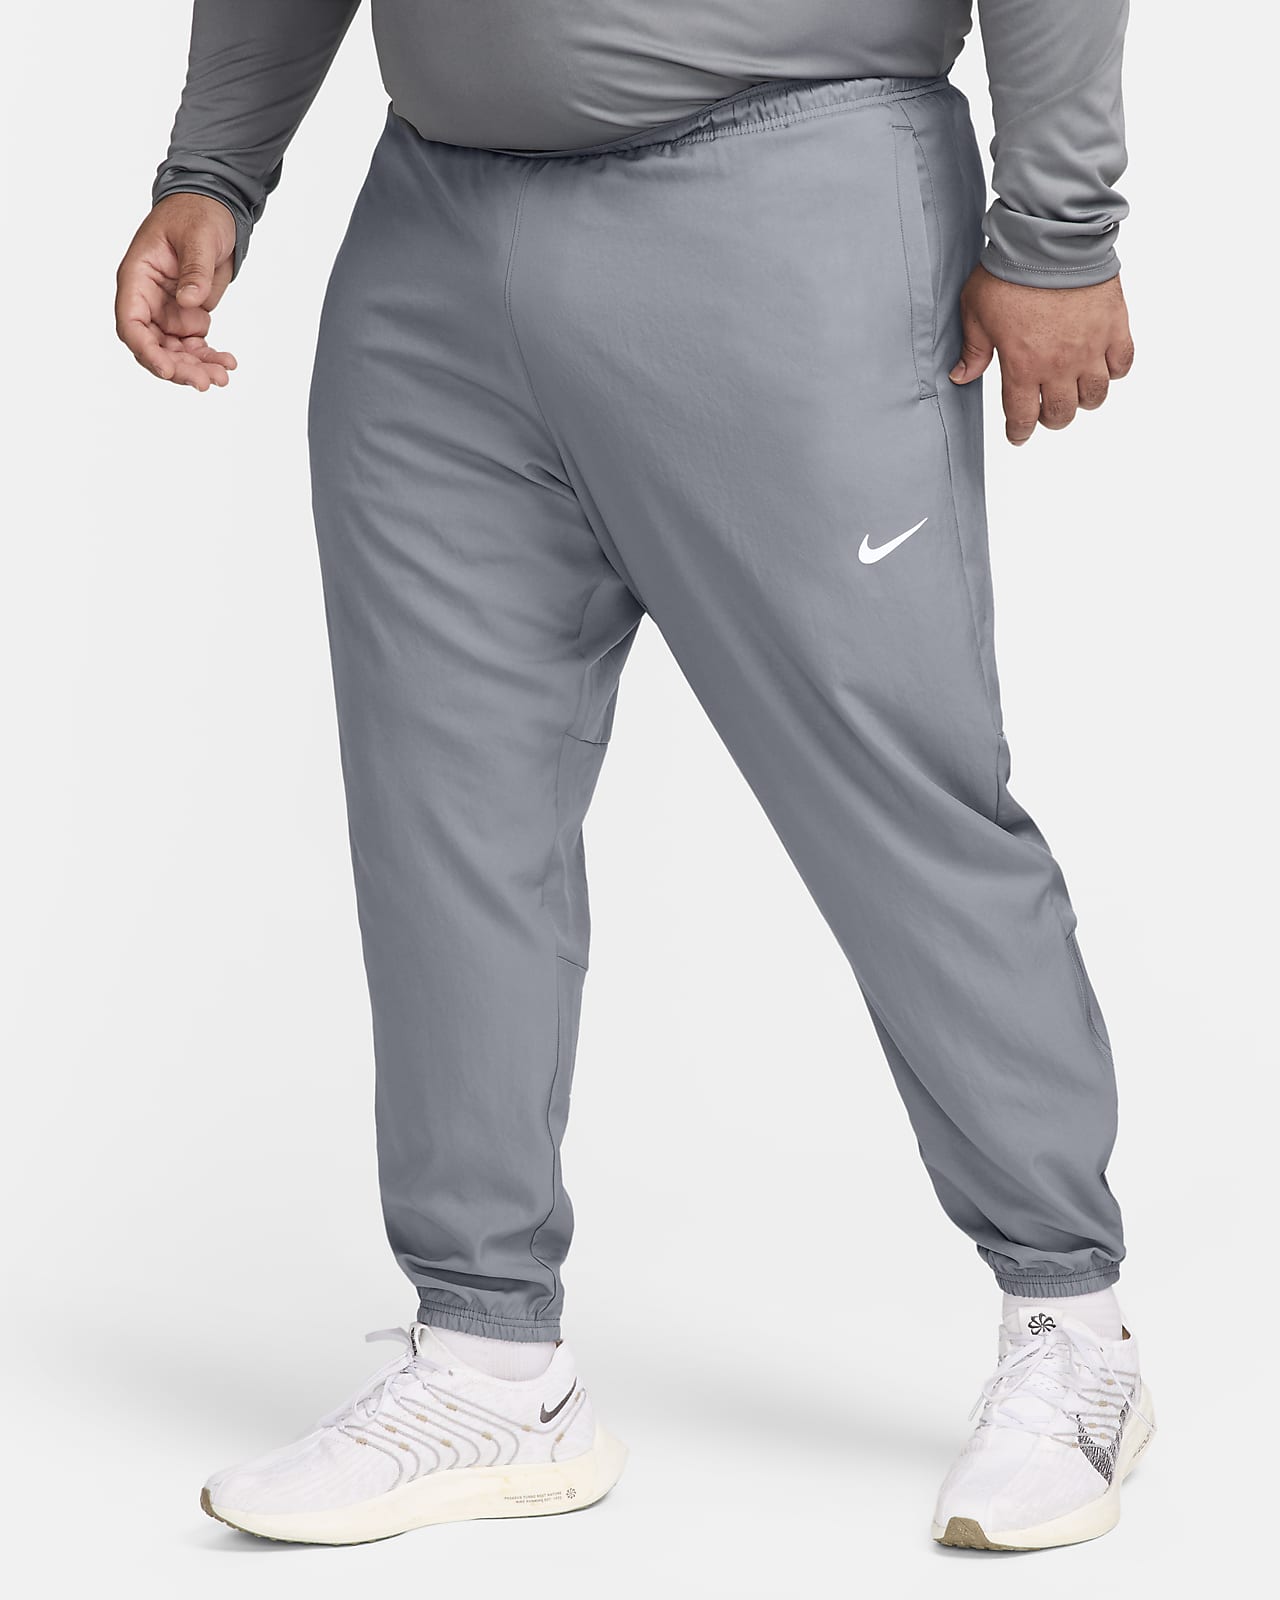 Pants de running de tejido Woven para hombre Nike Dri-FIT Challenger.